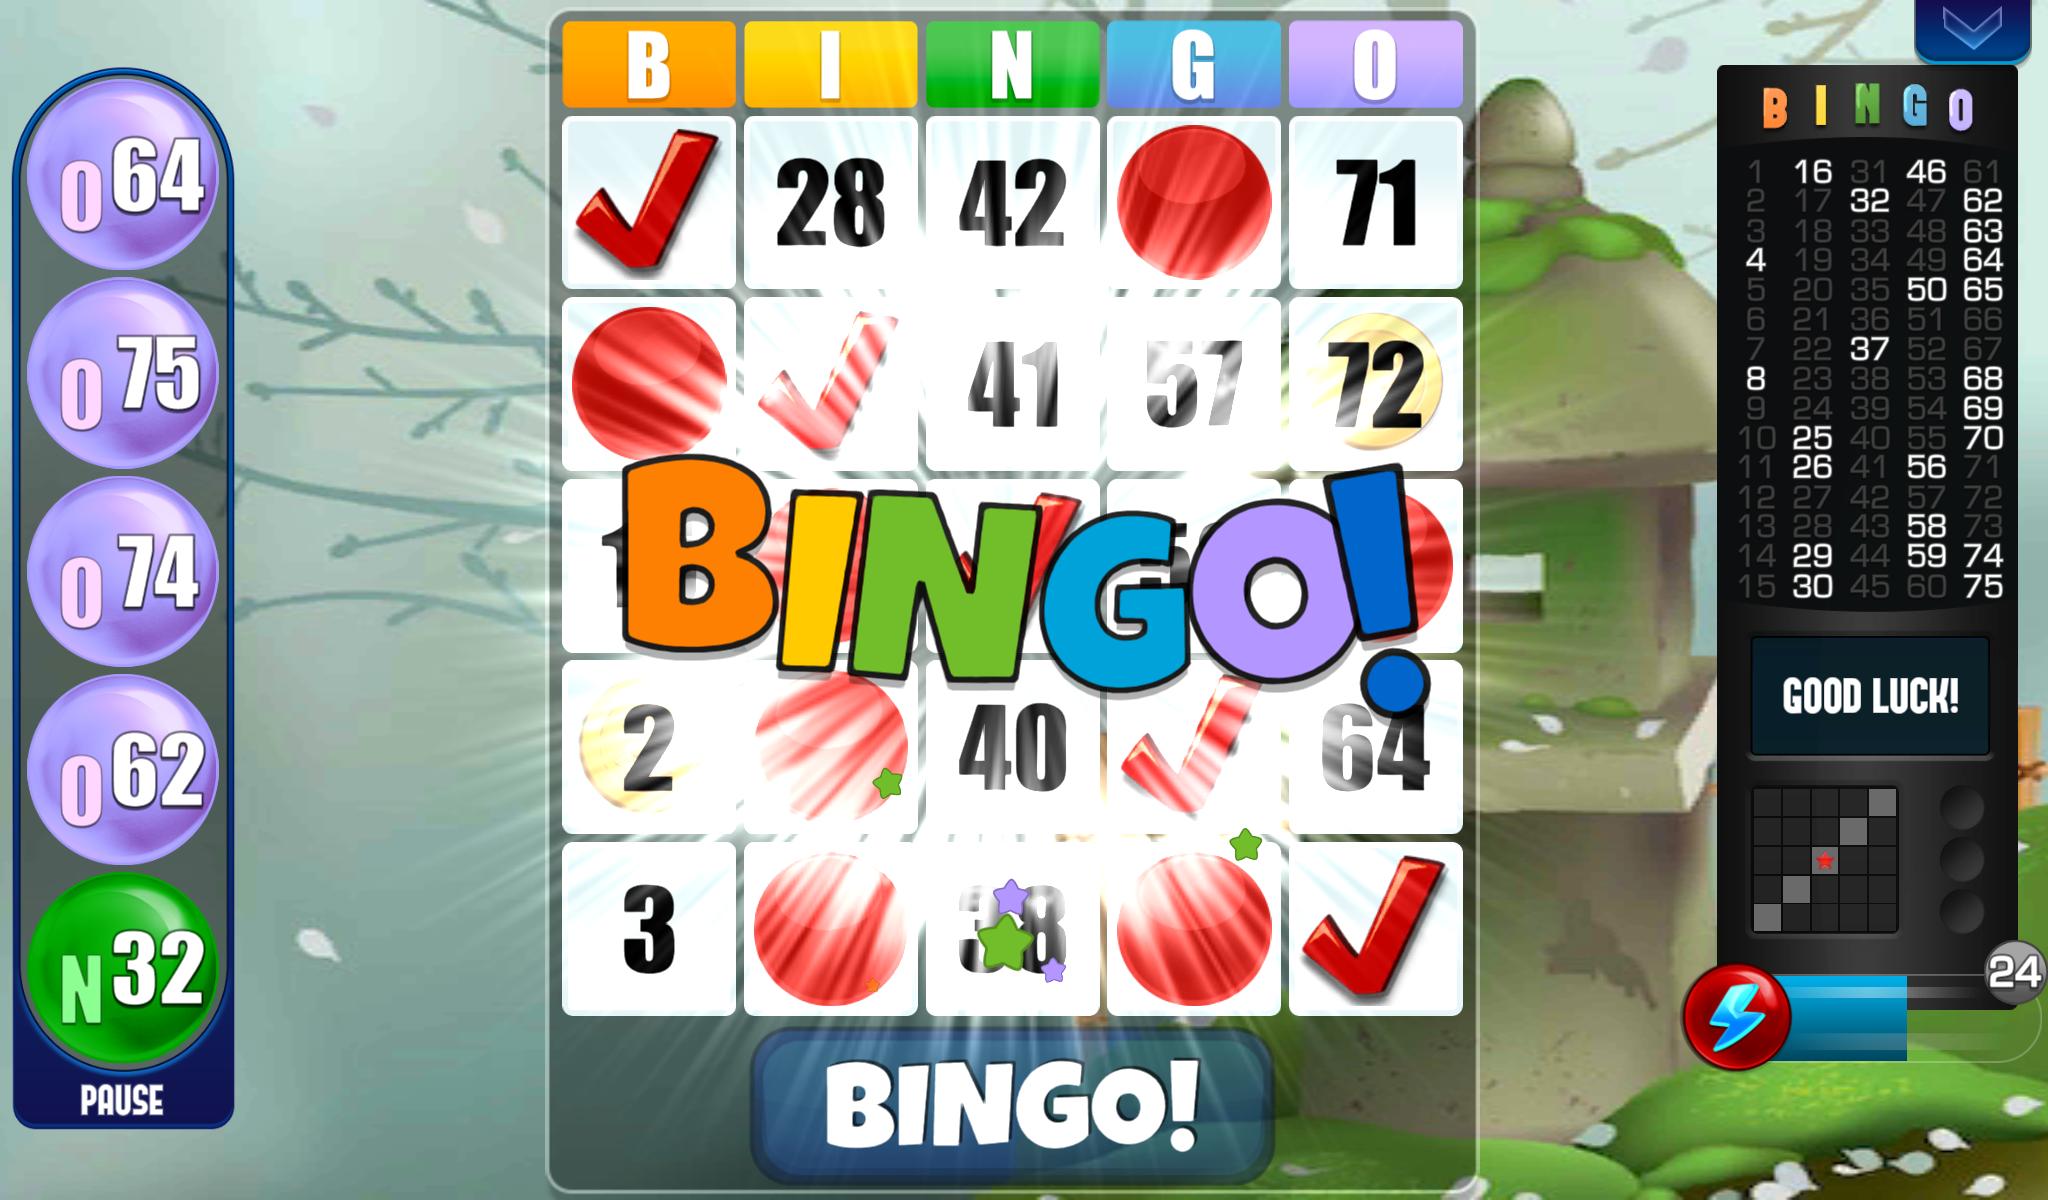 Bingo - Free Bingo Games for Android - APK Download
